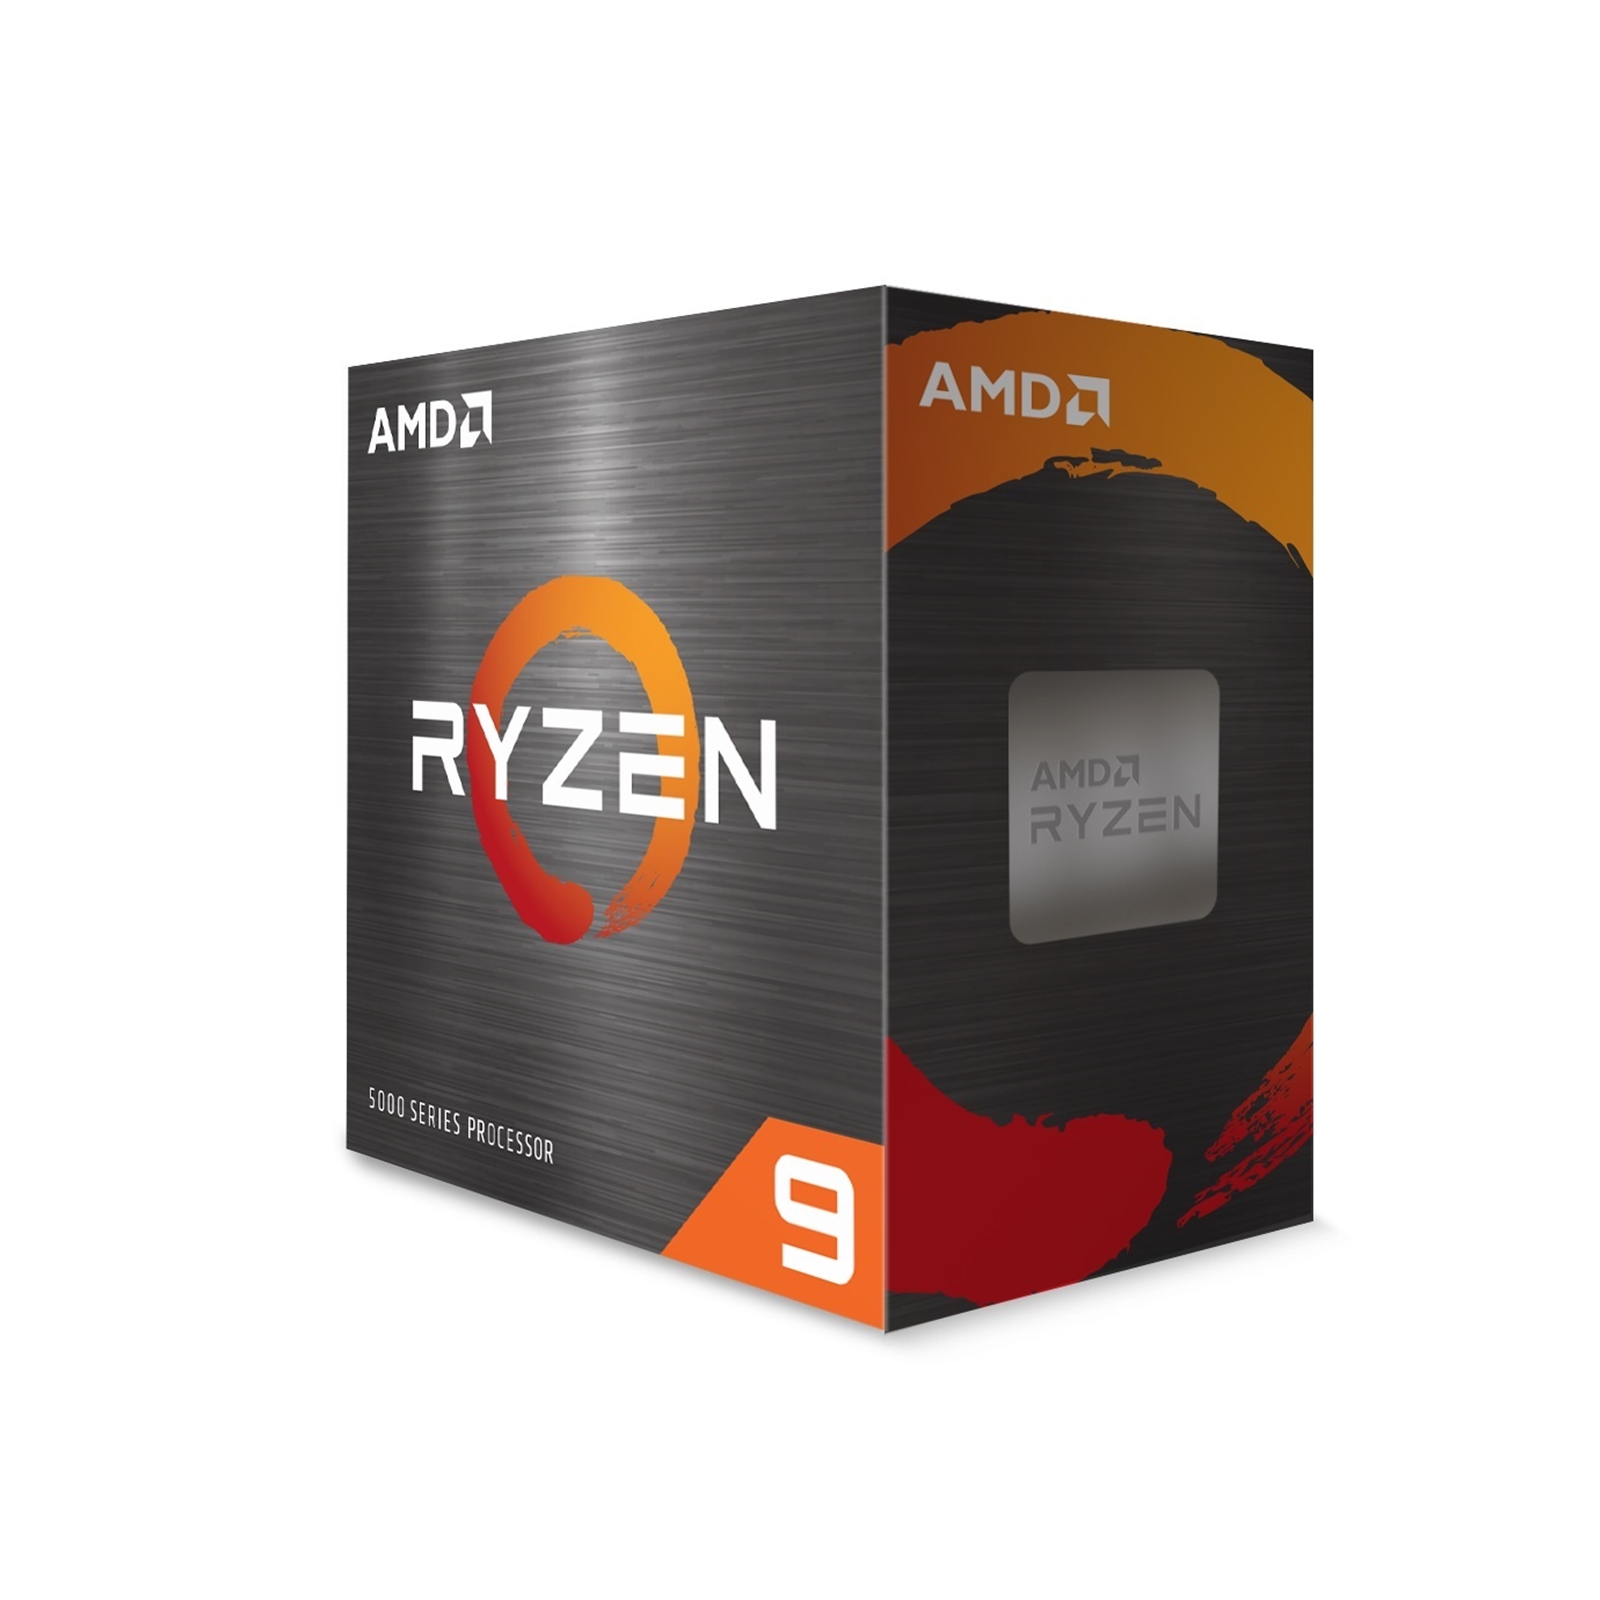 AMD Ryzen 9 5950X 3.4GHz 16 Core AM4 Processor, 32 Threads, 4.9GHz Boost